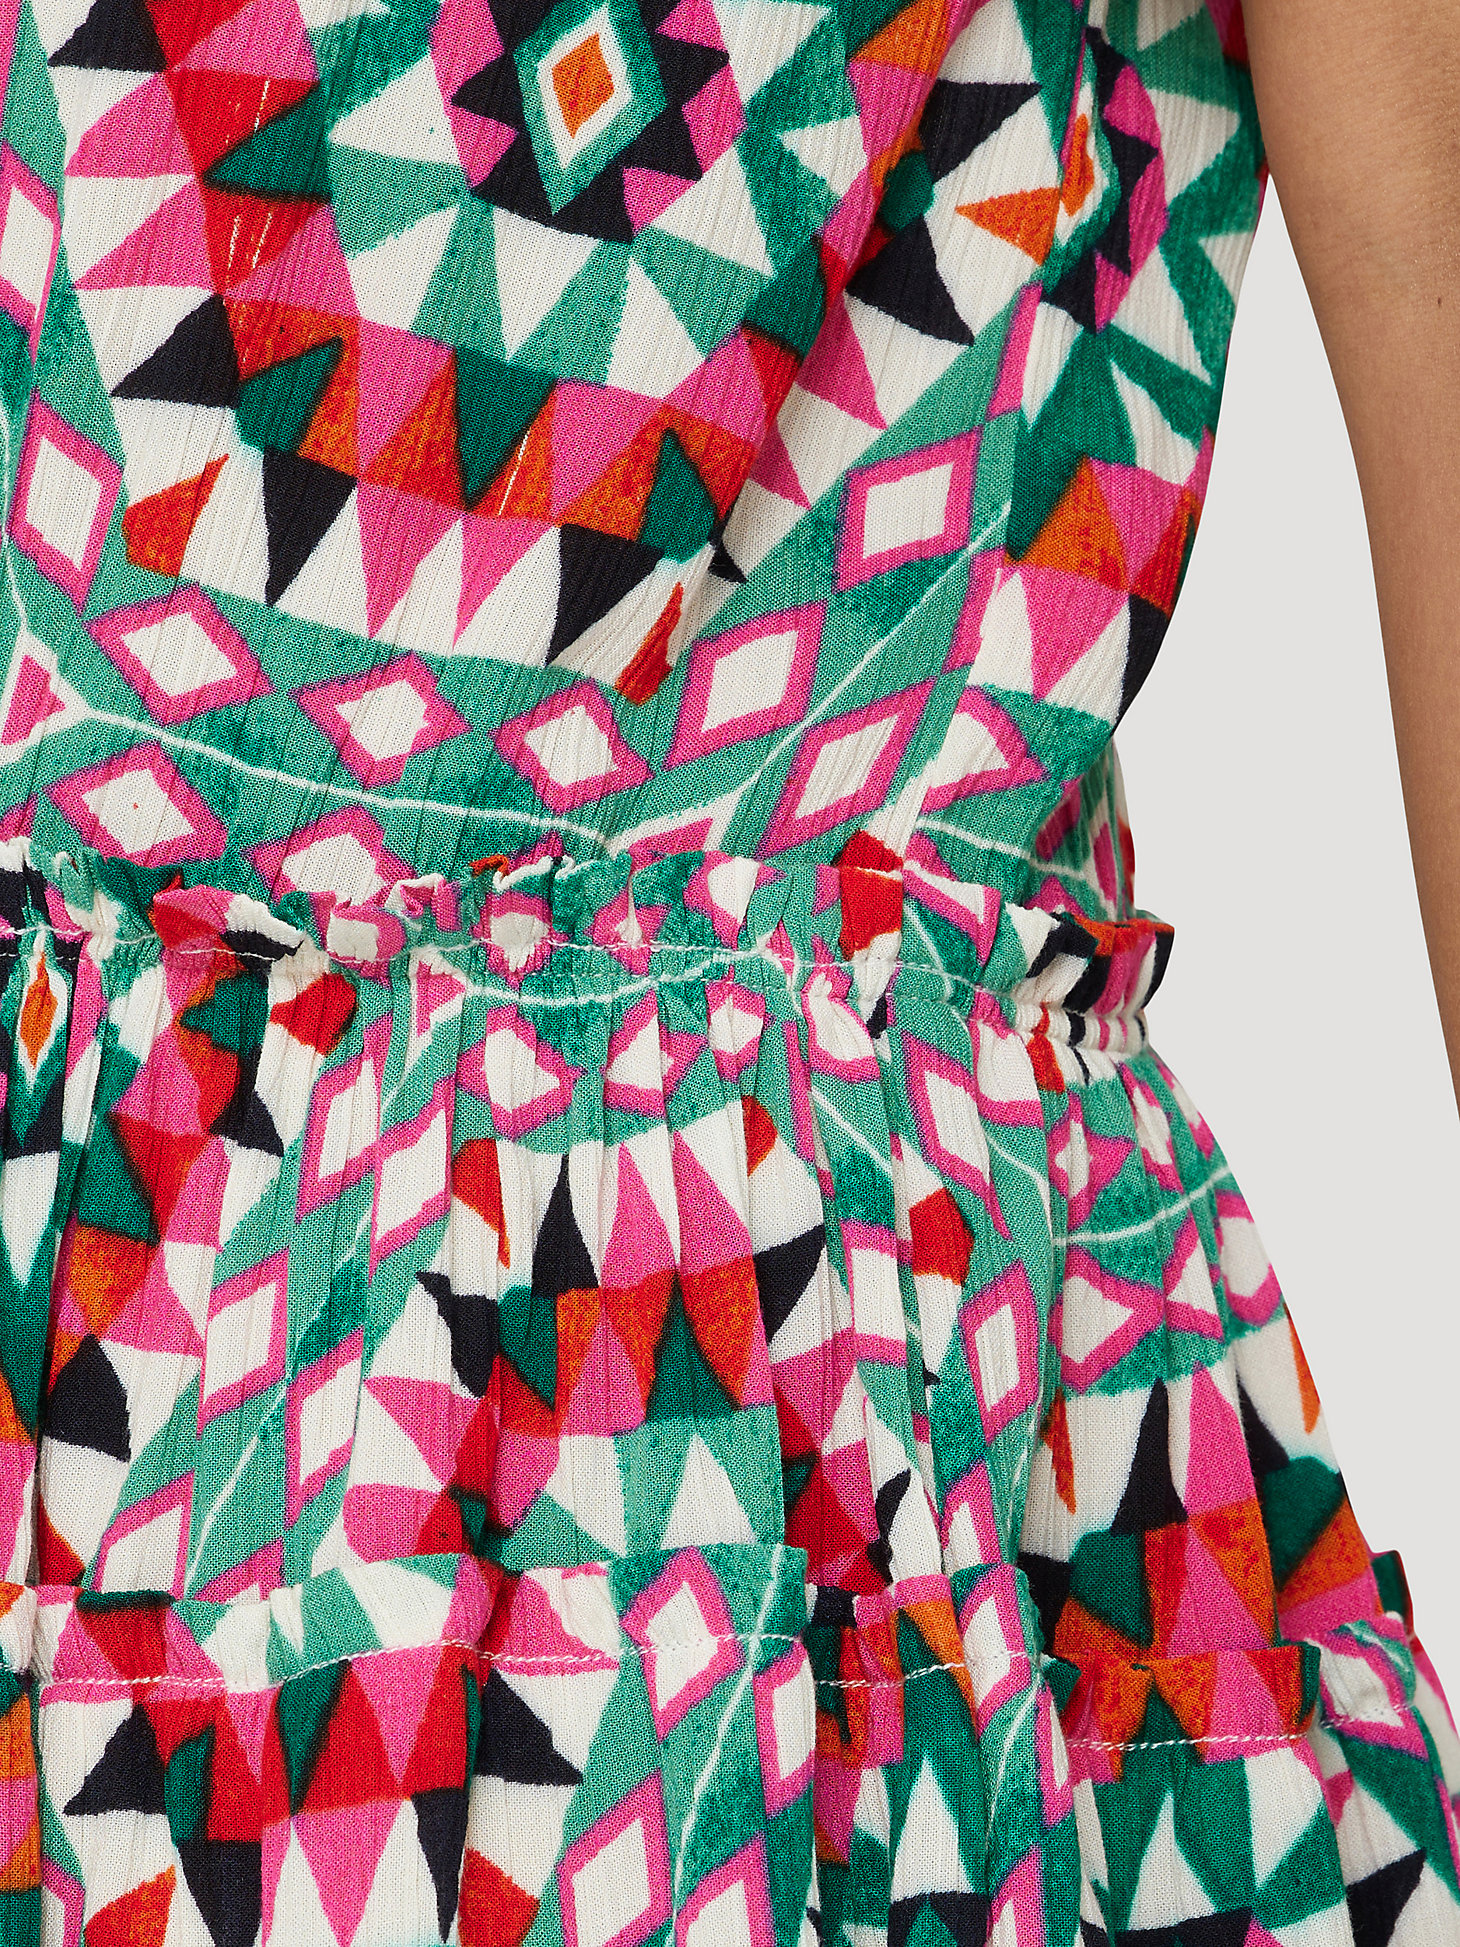 Women's Wrangler Kaleidoscope Cold Shoulder Dress in Multicolor alternative view 3